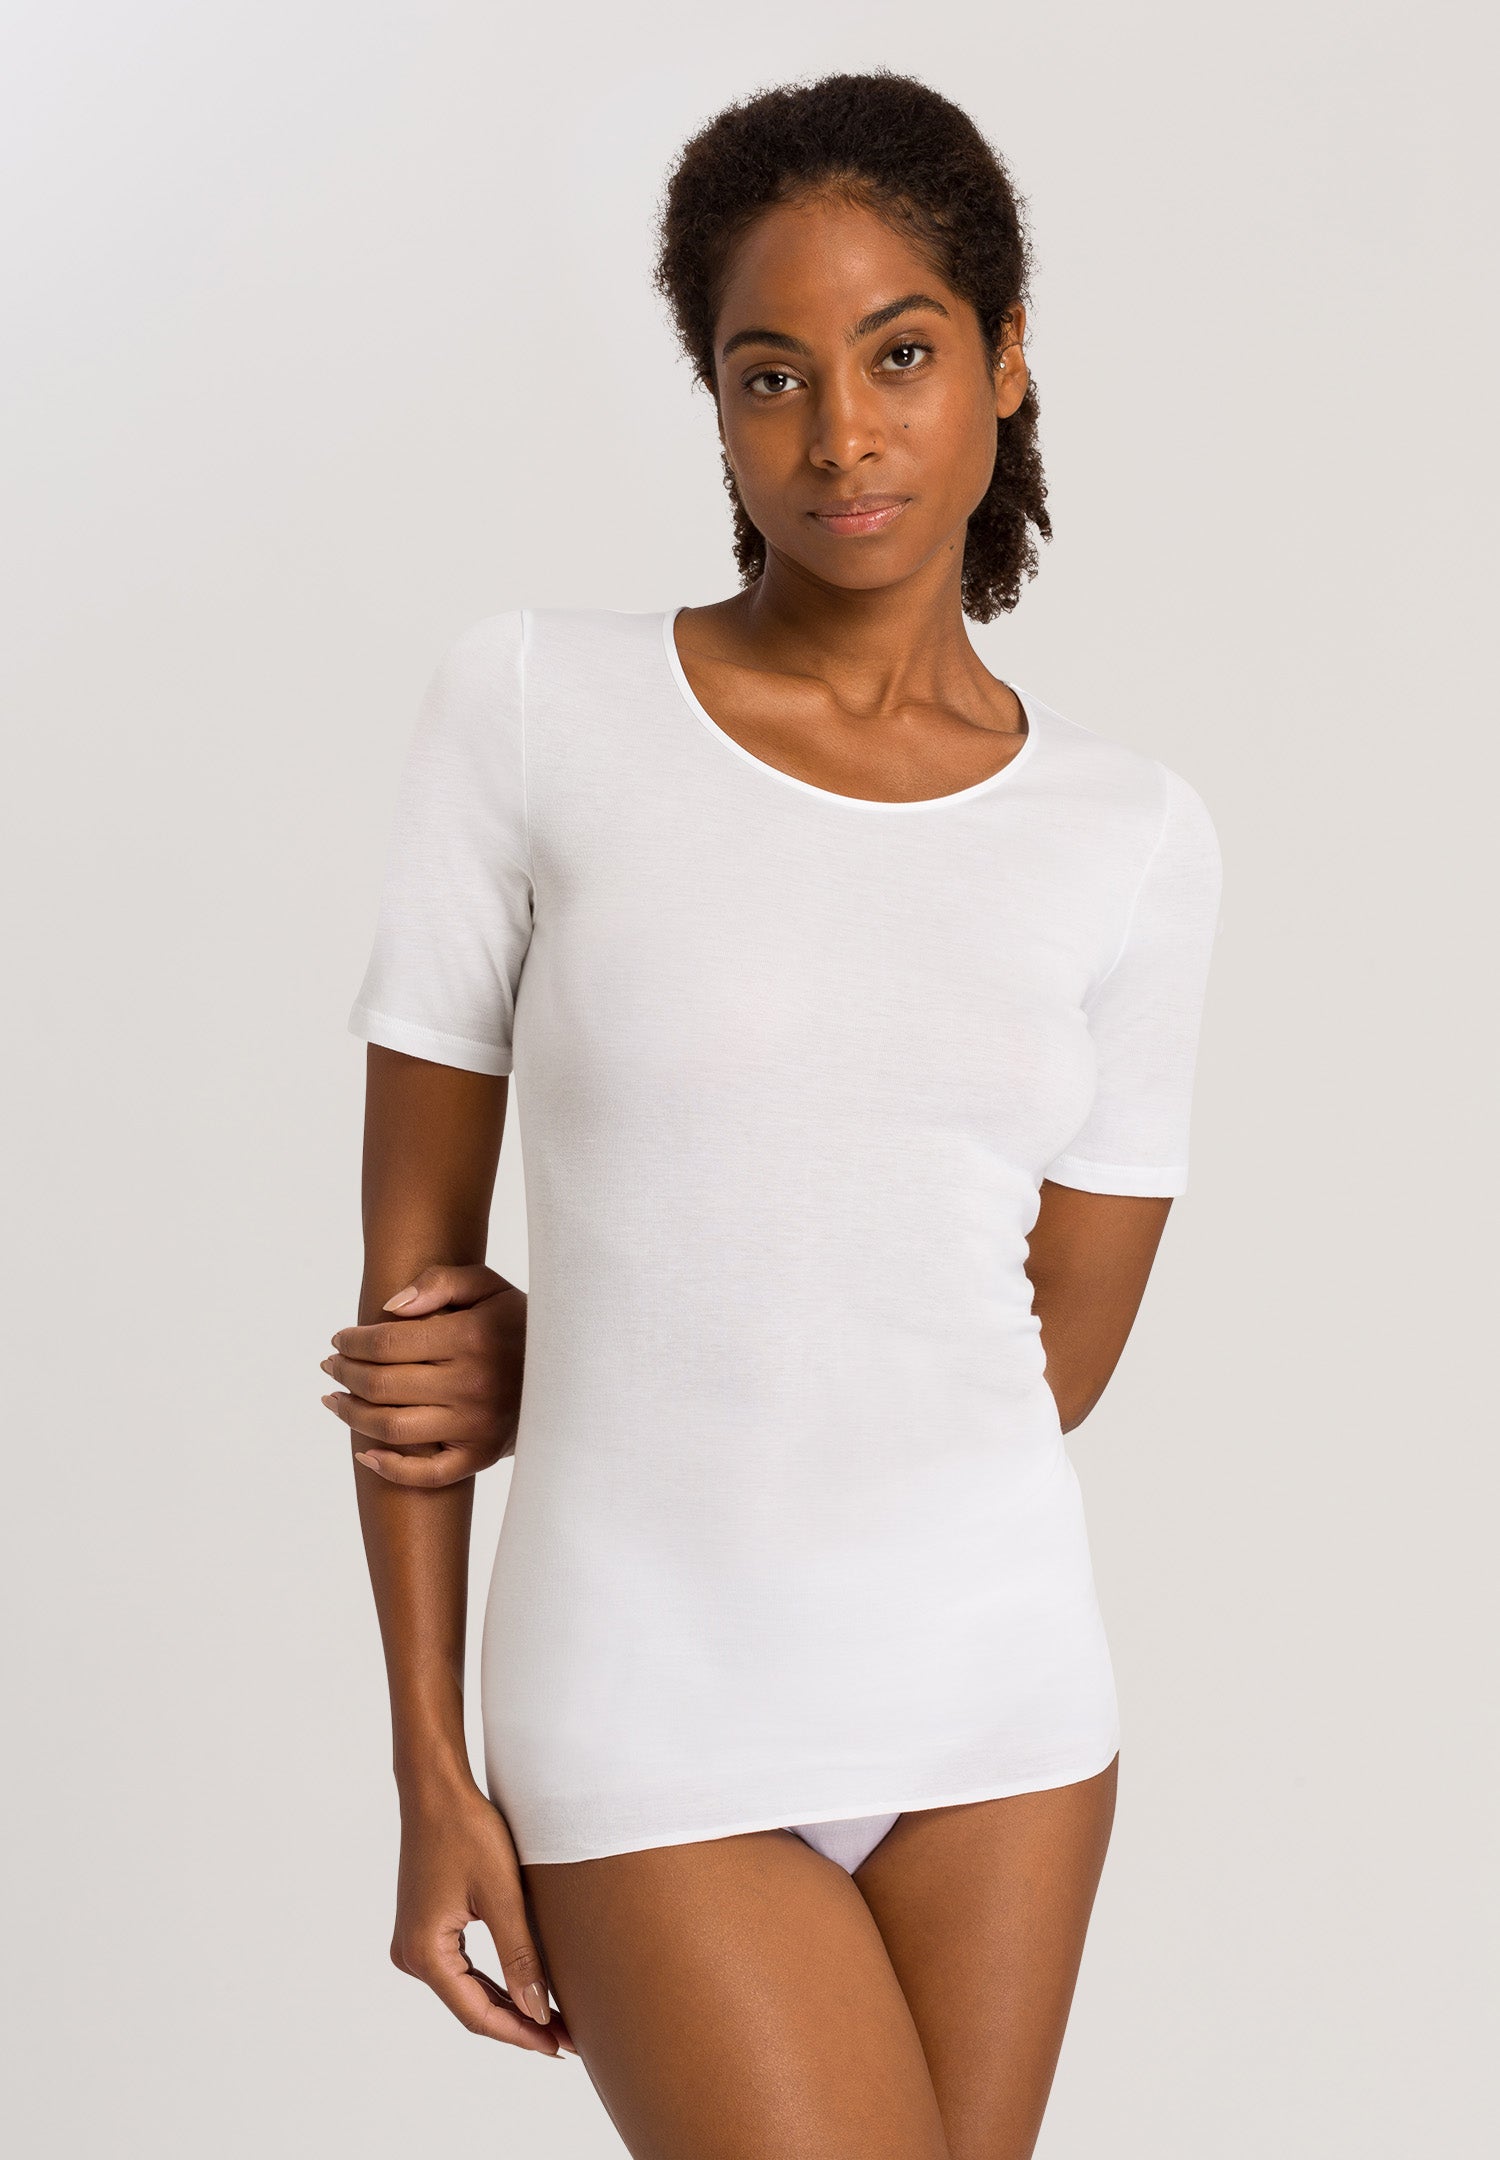 HANRO White Cotton Seamless Short Sleeve Shirt